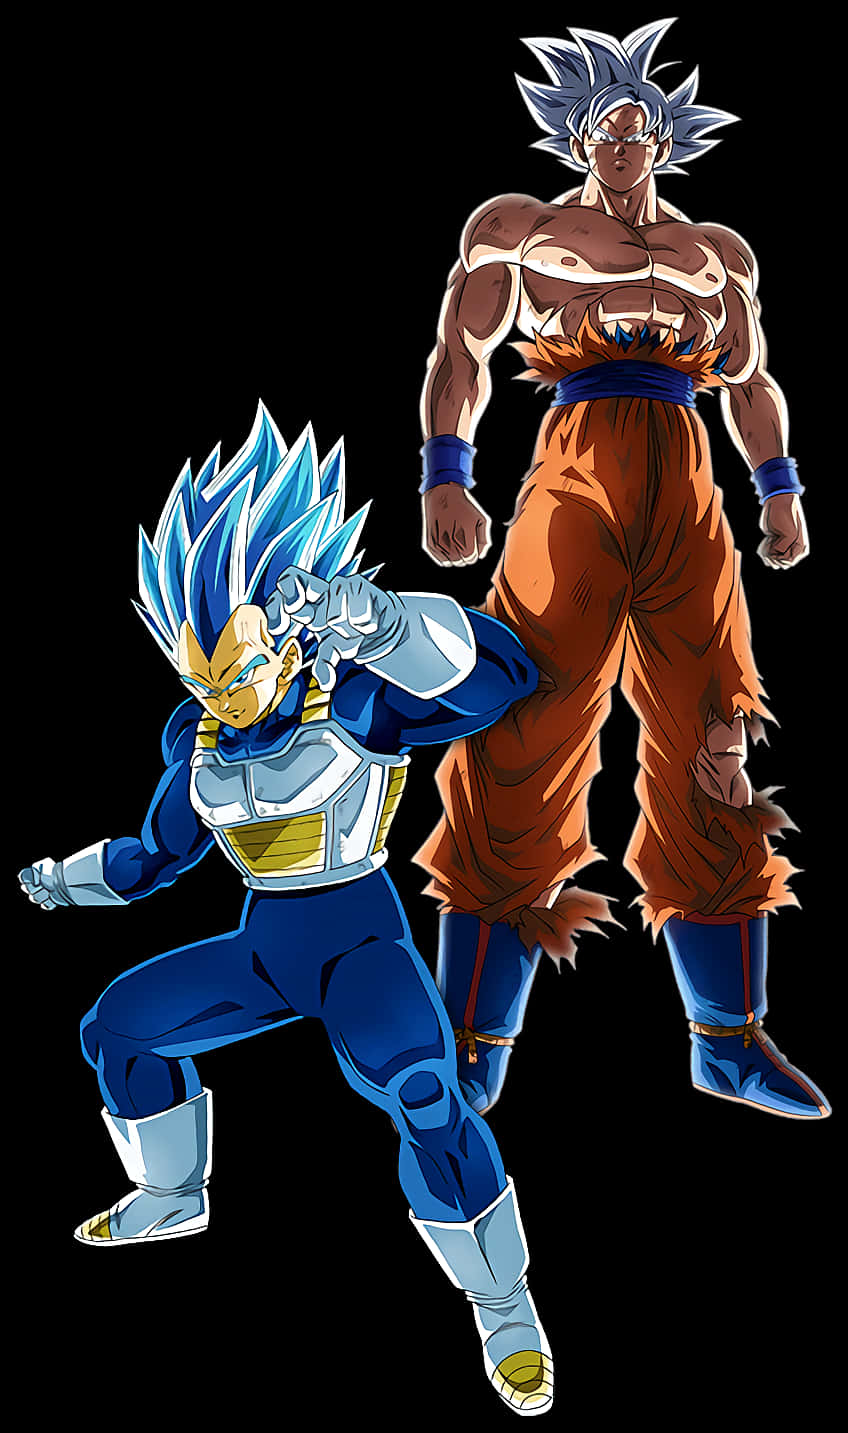 A Cartoon Of A Man And A Man With Blue Hair